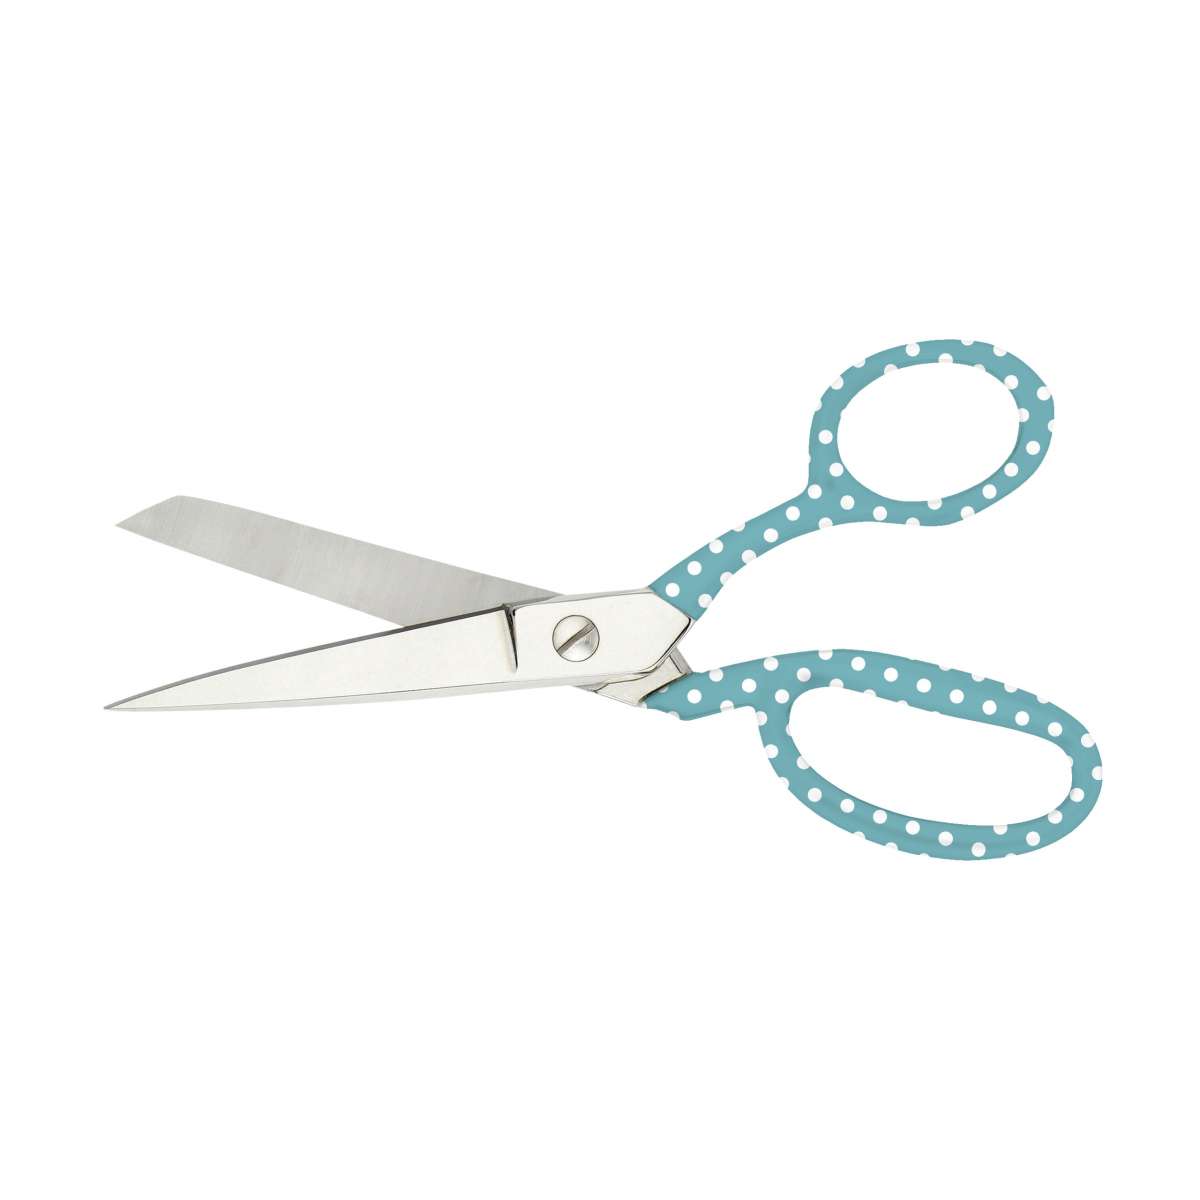 Prym Polka Dot Dressmaking scissors